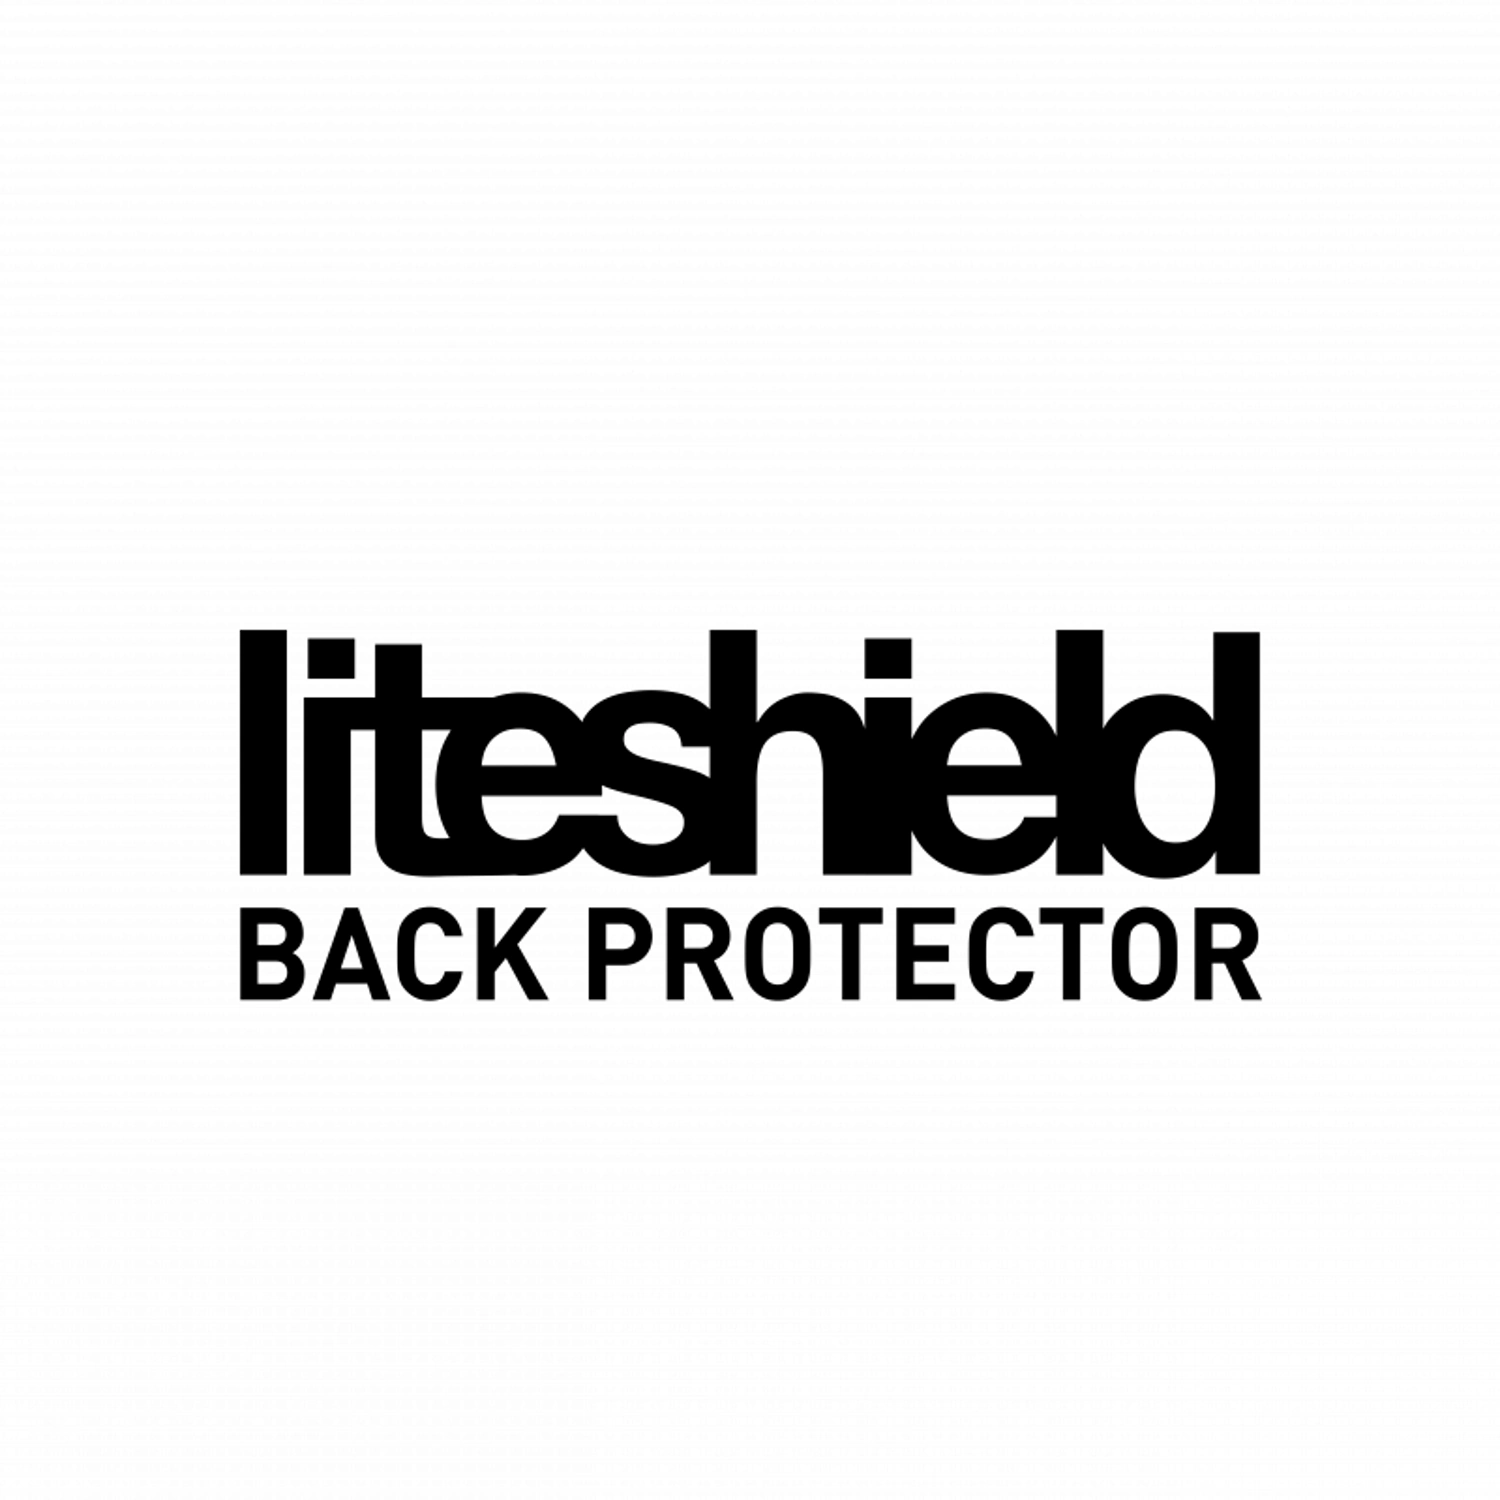 liteshield back protector